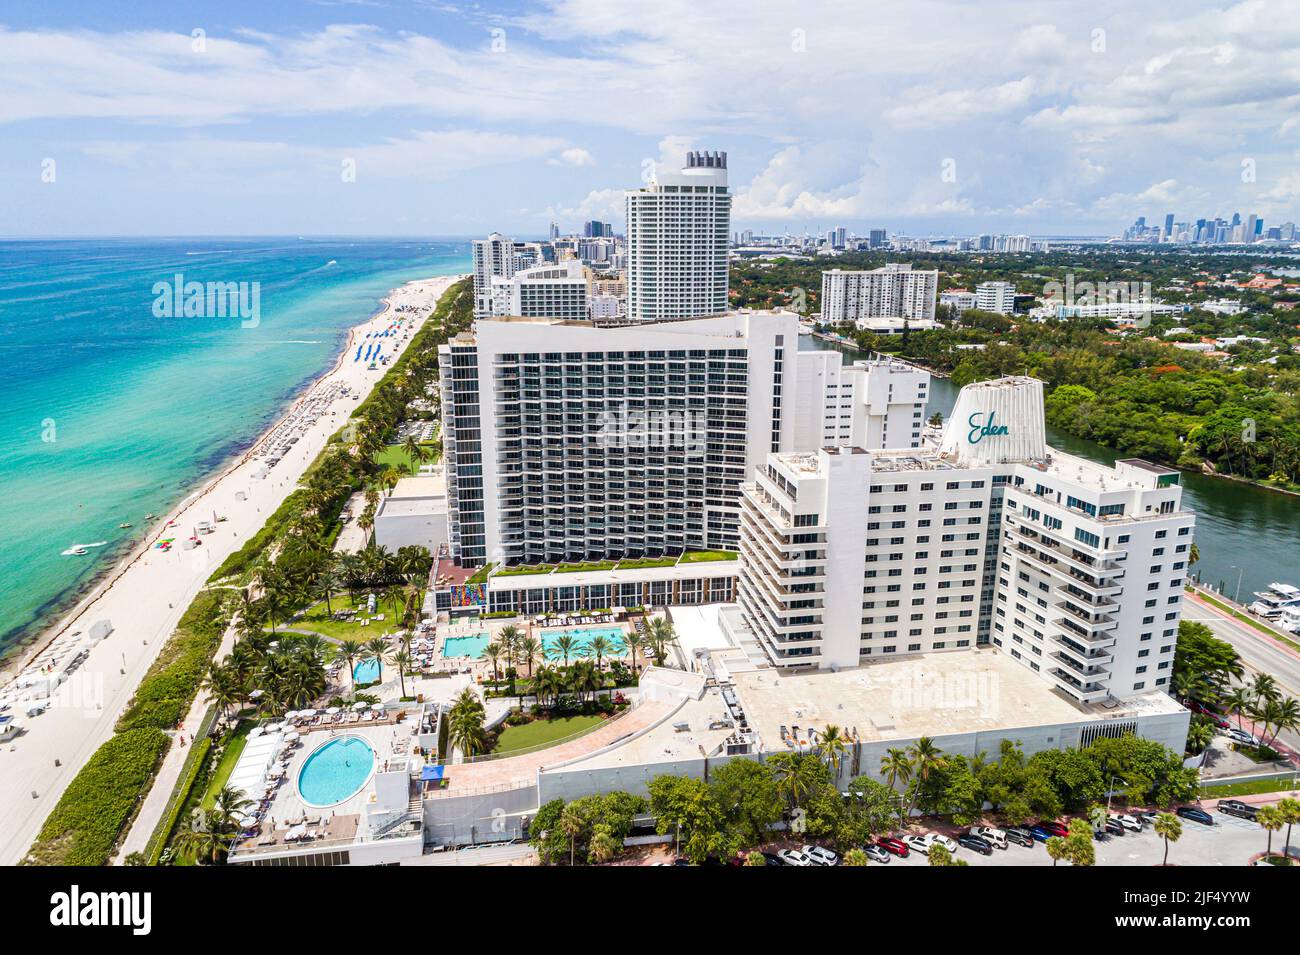 Miami Beach Florida,aerial overhead view from above,Atlantic Ocean shore shoreline public beachfront waterfront hotels condominium buildings,Eden Roc Stock Photo